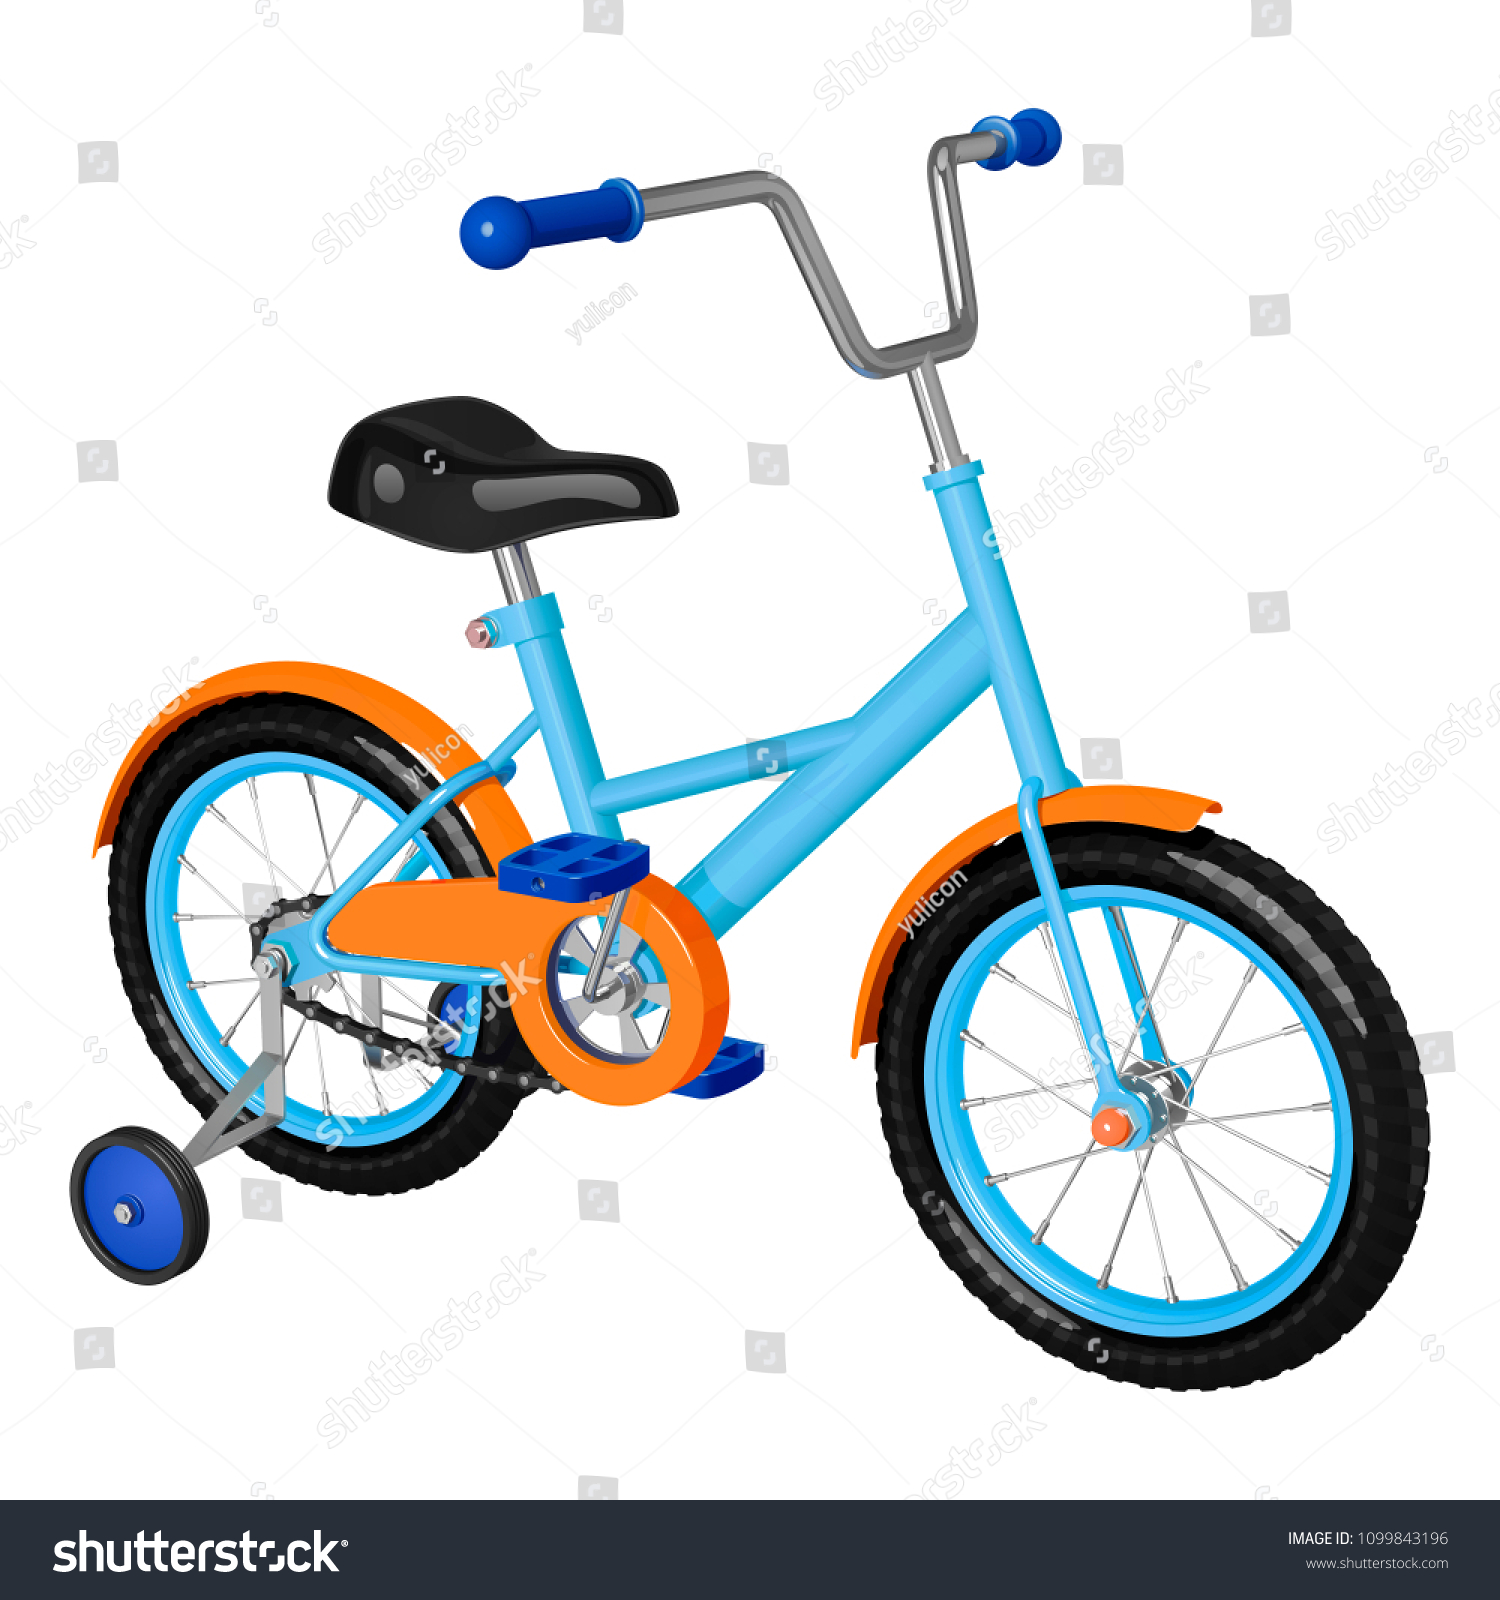 children's bikes with training wheels